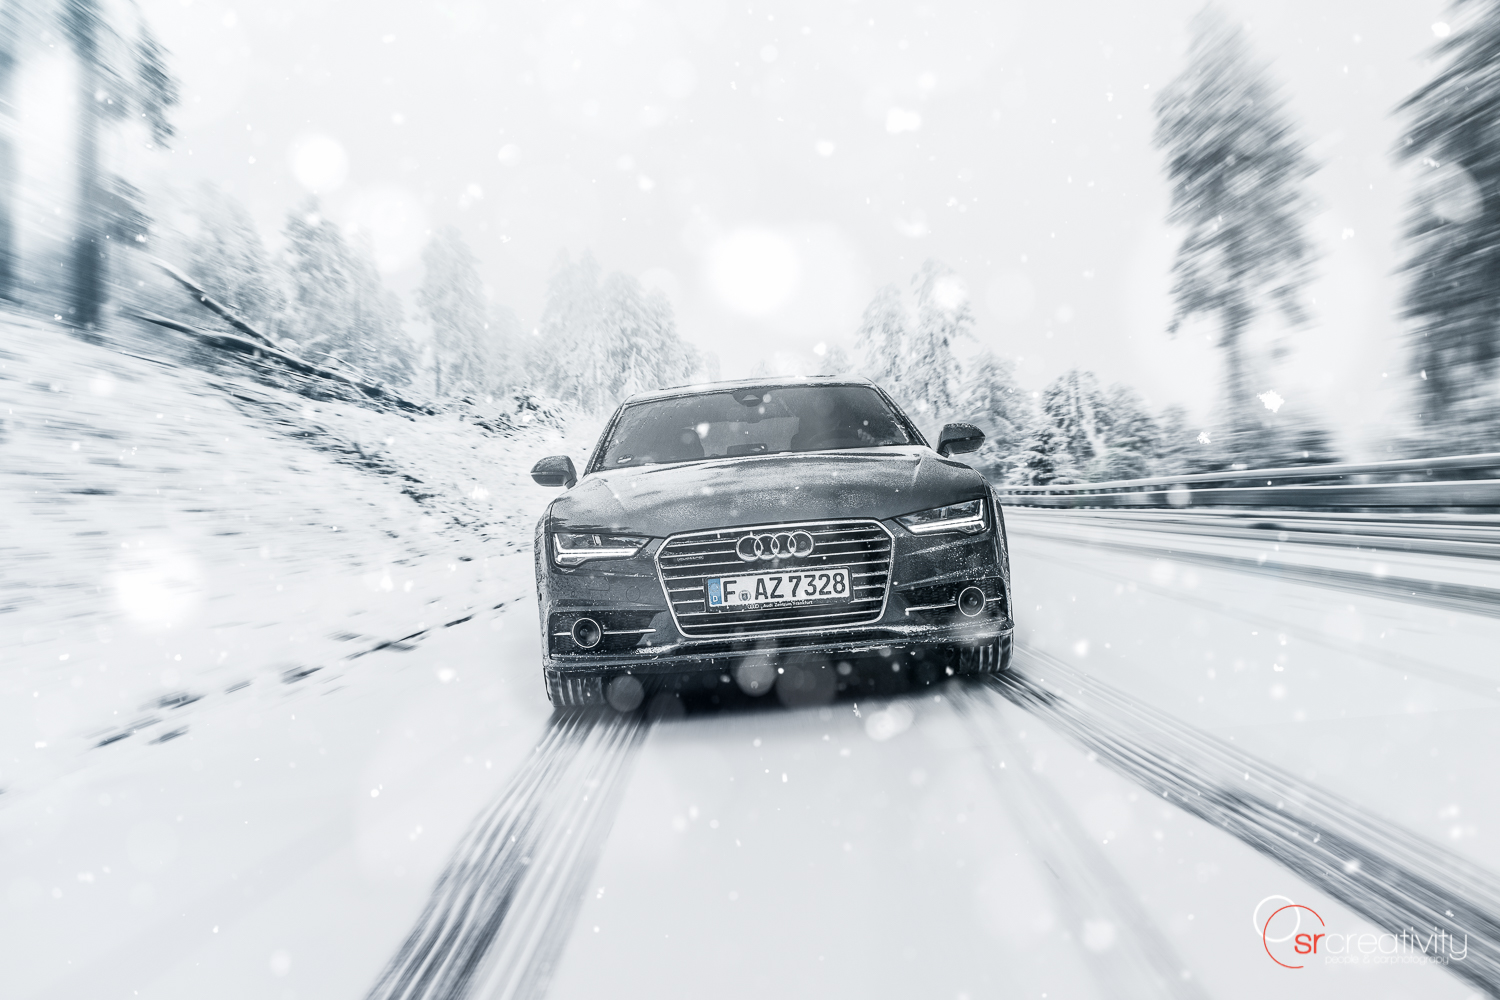 Audi A7 2015 - SR-CReativity - www.sr-creativity.de